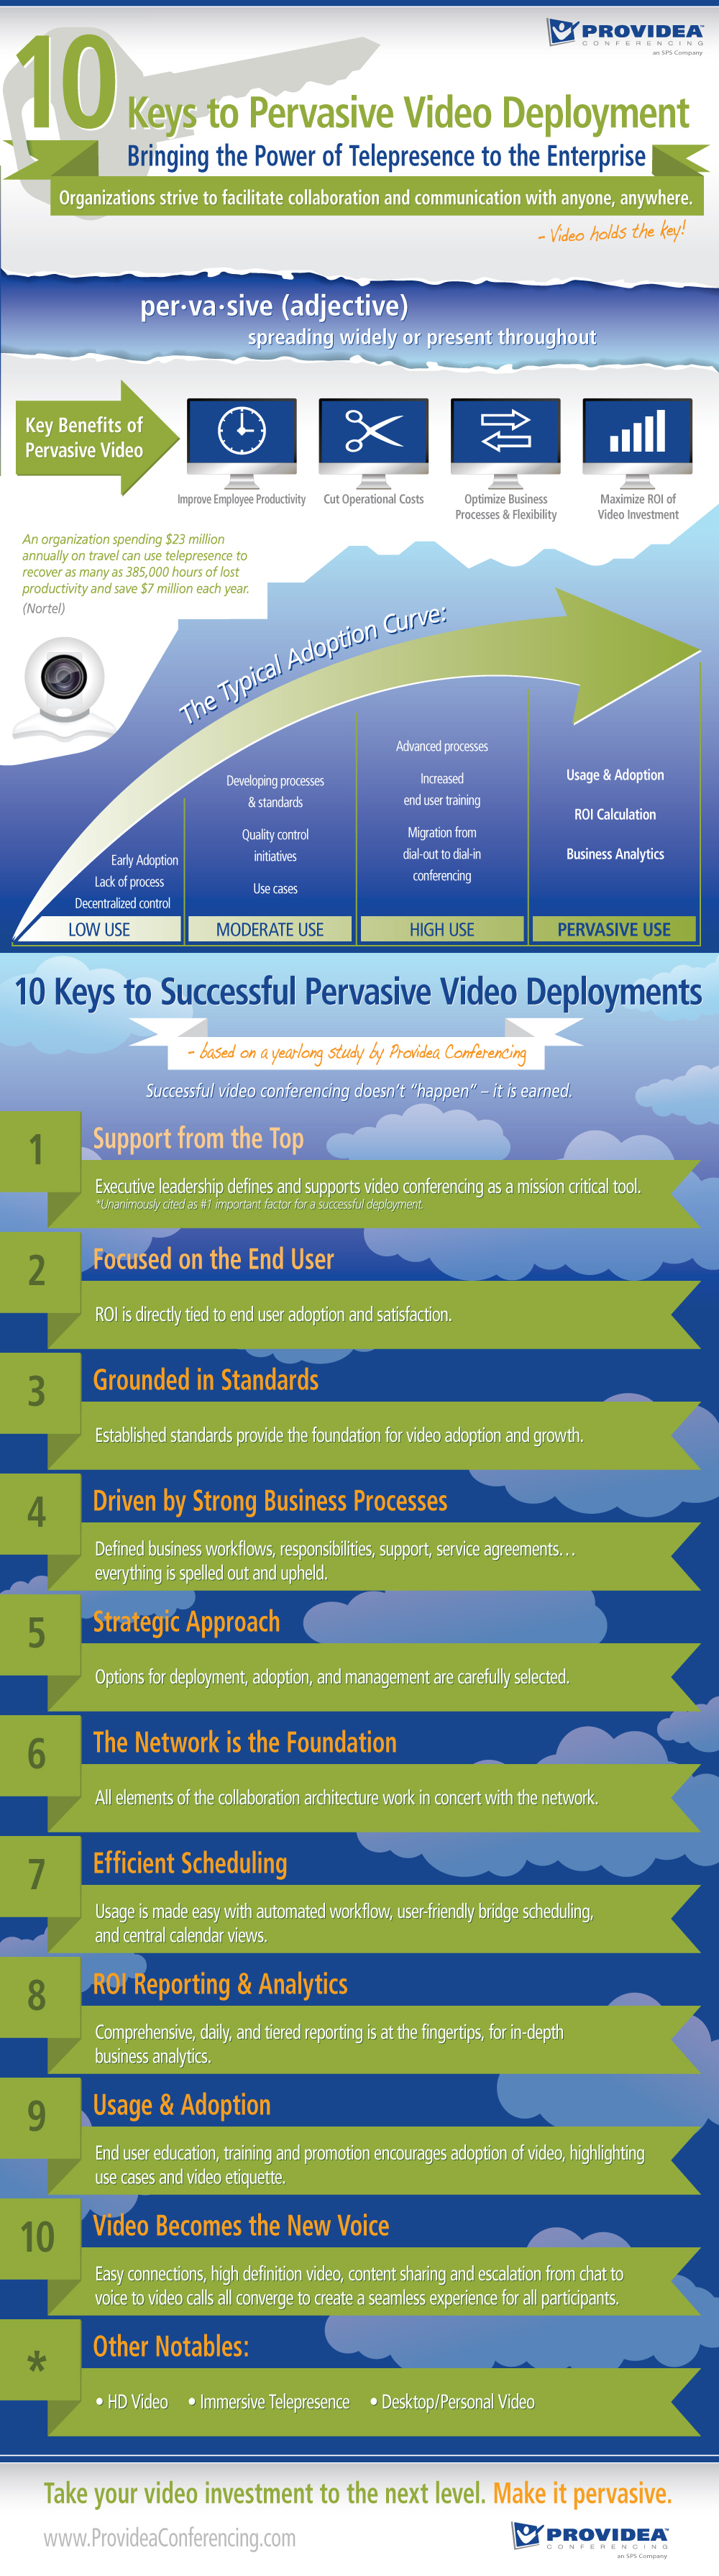 10 Keys to Pervasive Video Deployment